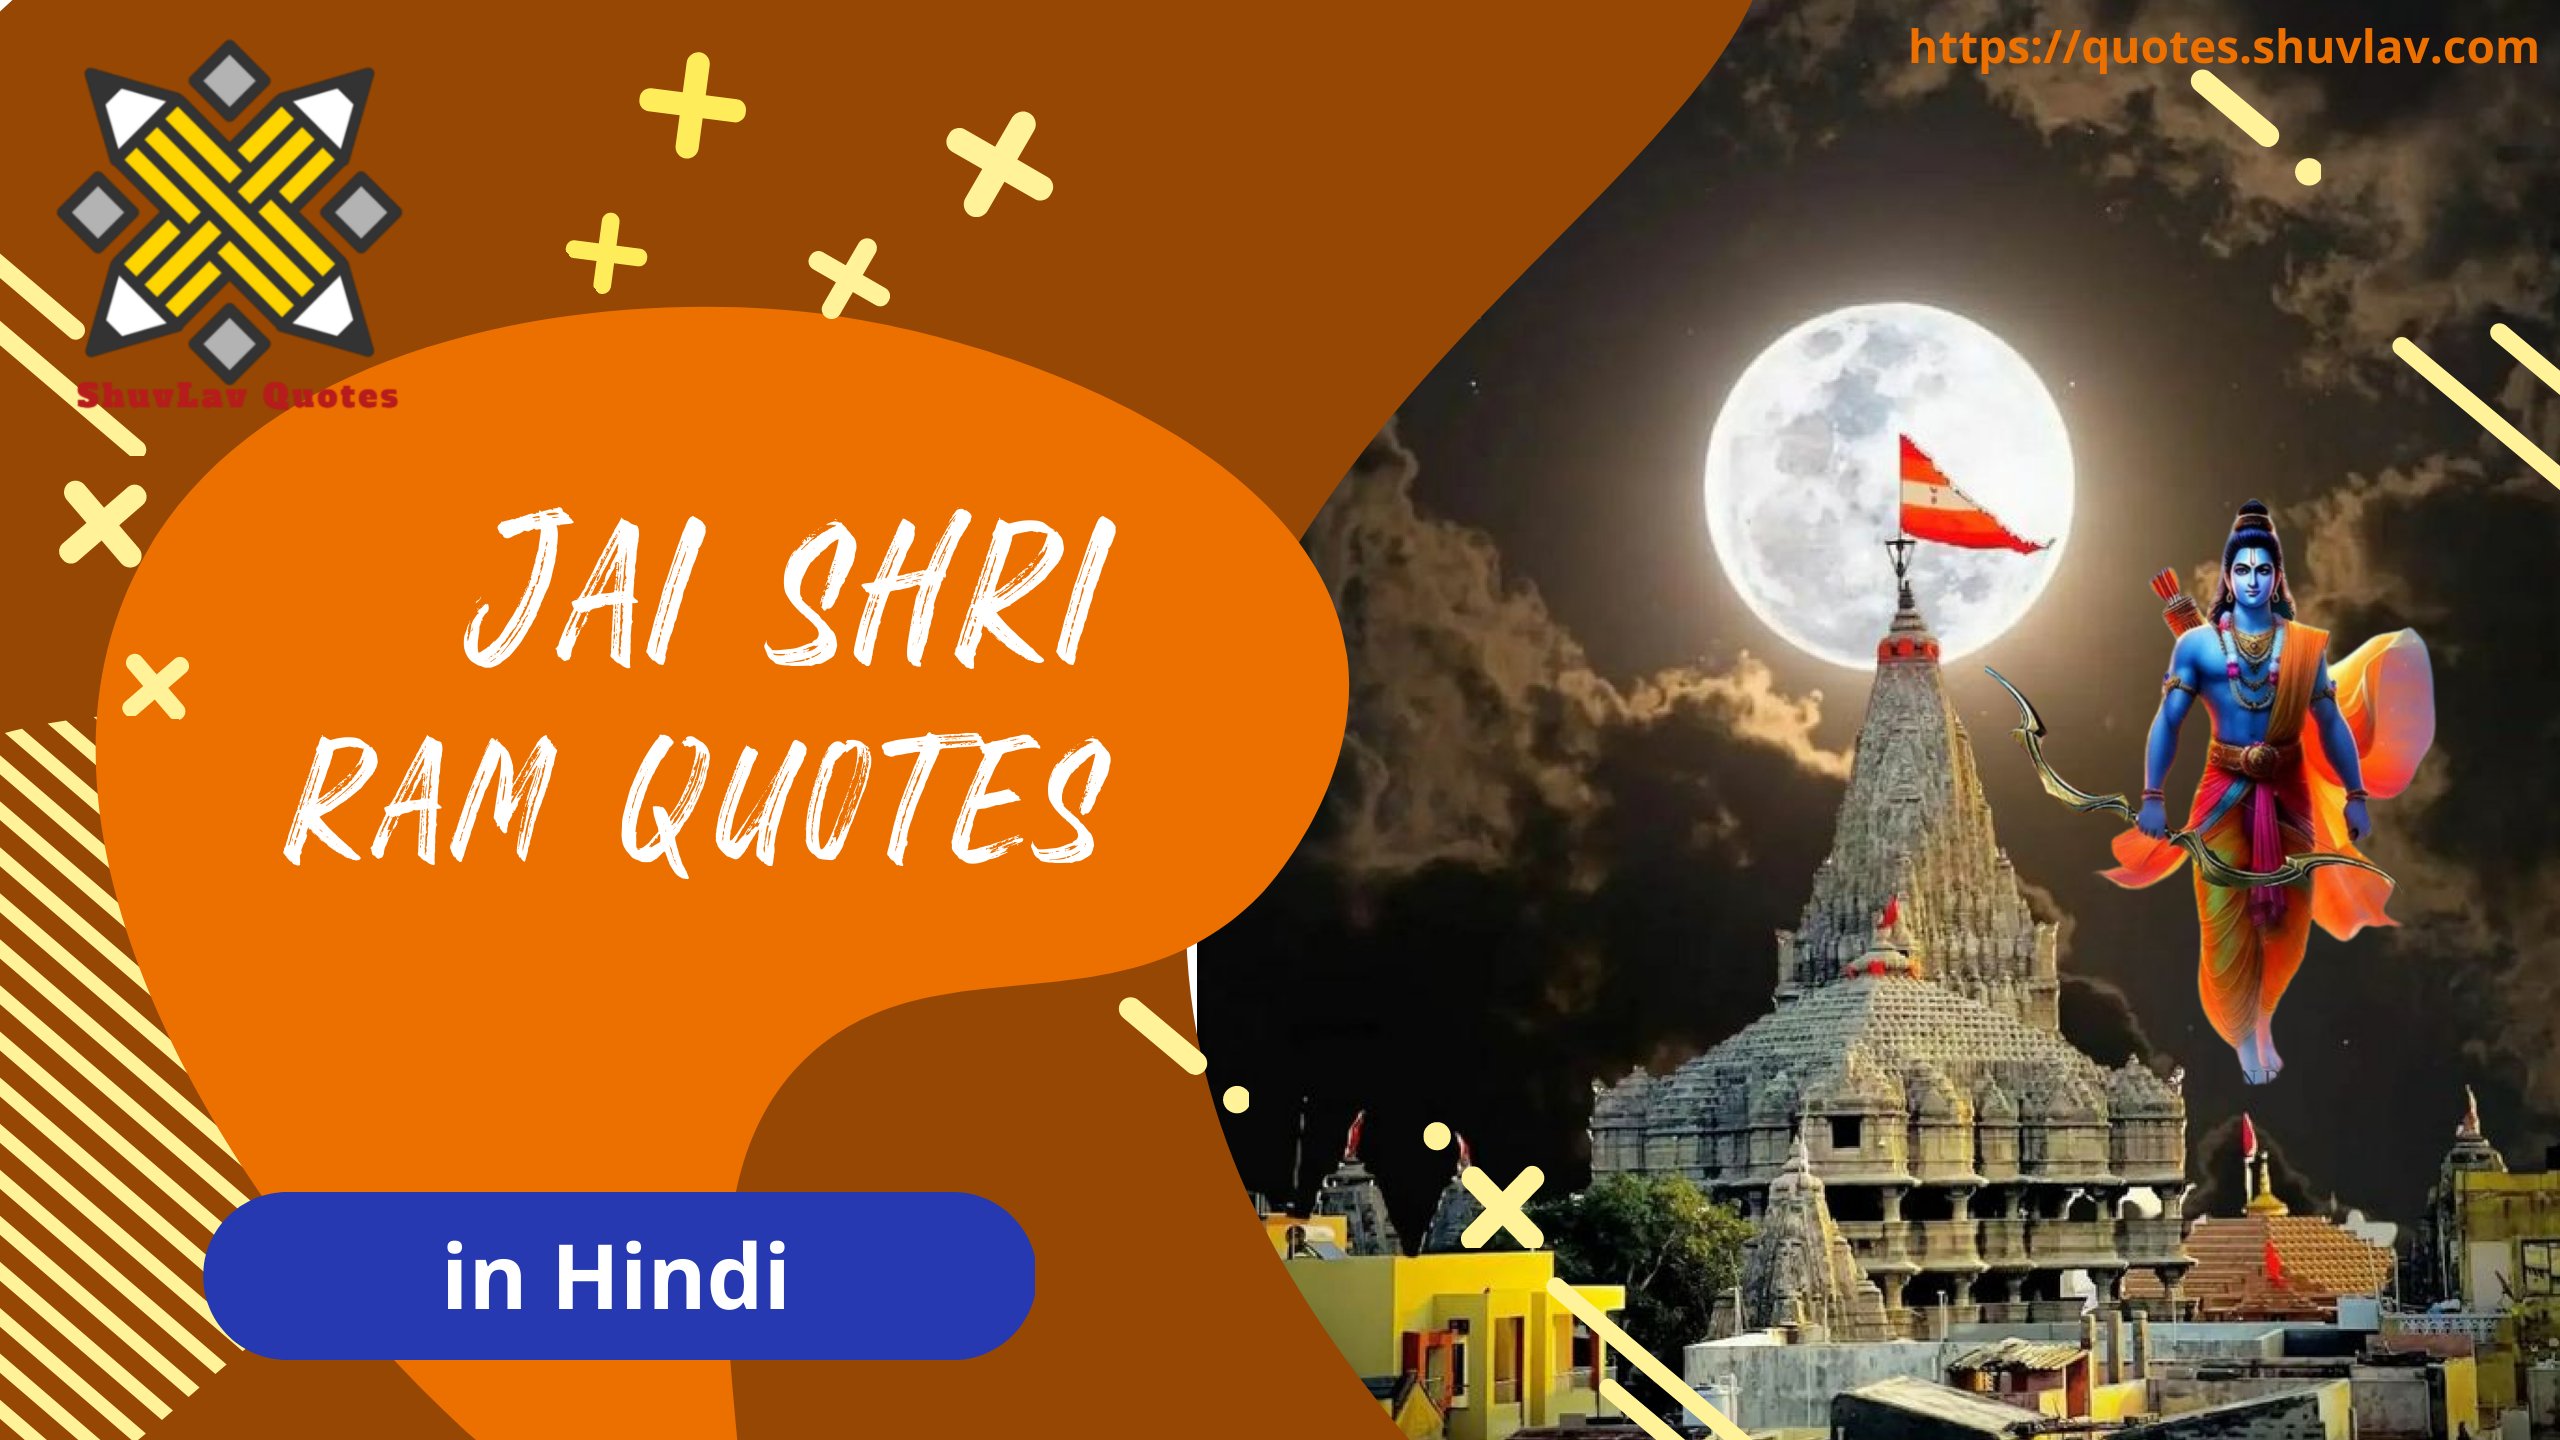 Jai shri ram quotes to Inspire Your Spiritual Journey